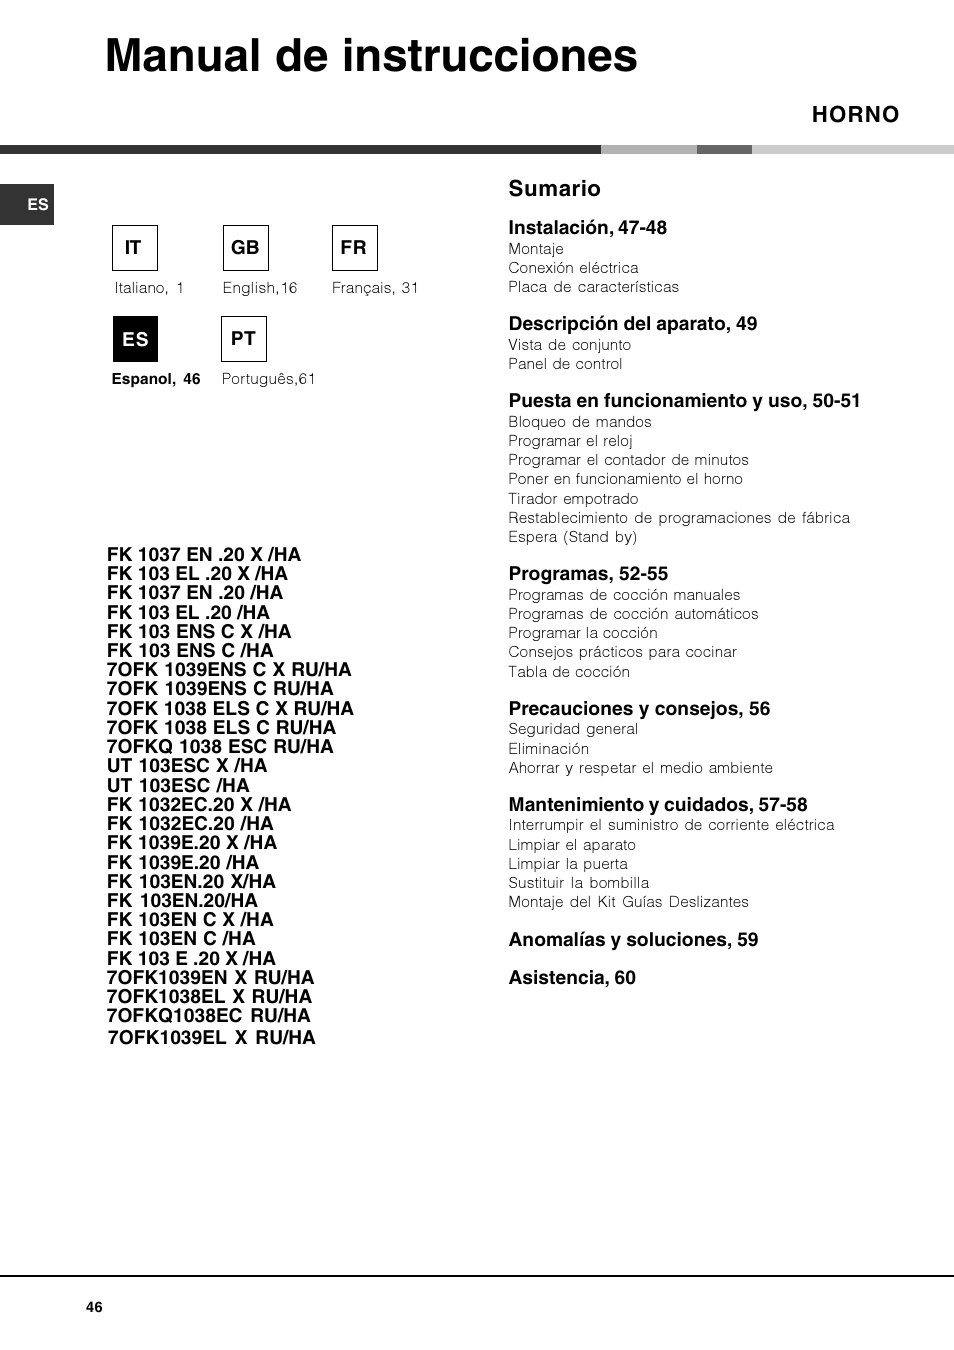 Manual de instrucciones, Horno sumario | Hotpoint Ariston Luce FK 103E.20  X-HA User Manual | Page 46 / 76